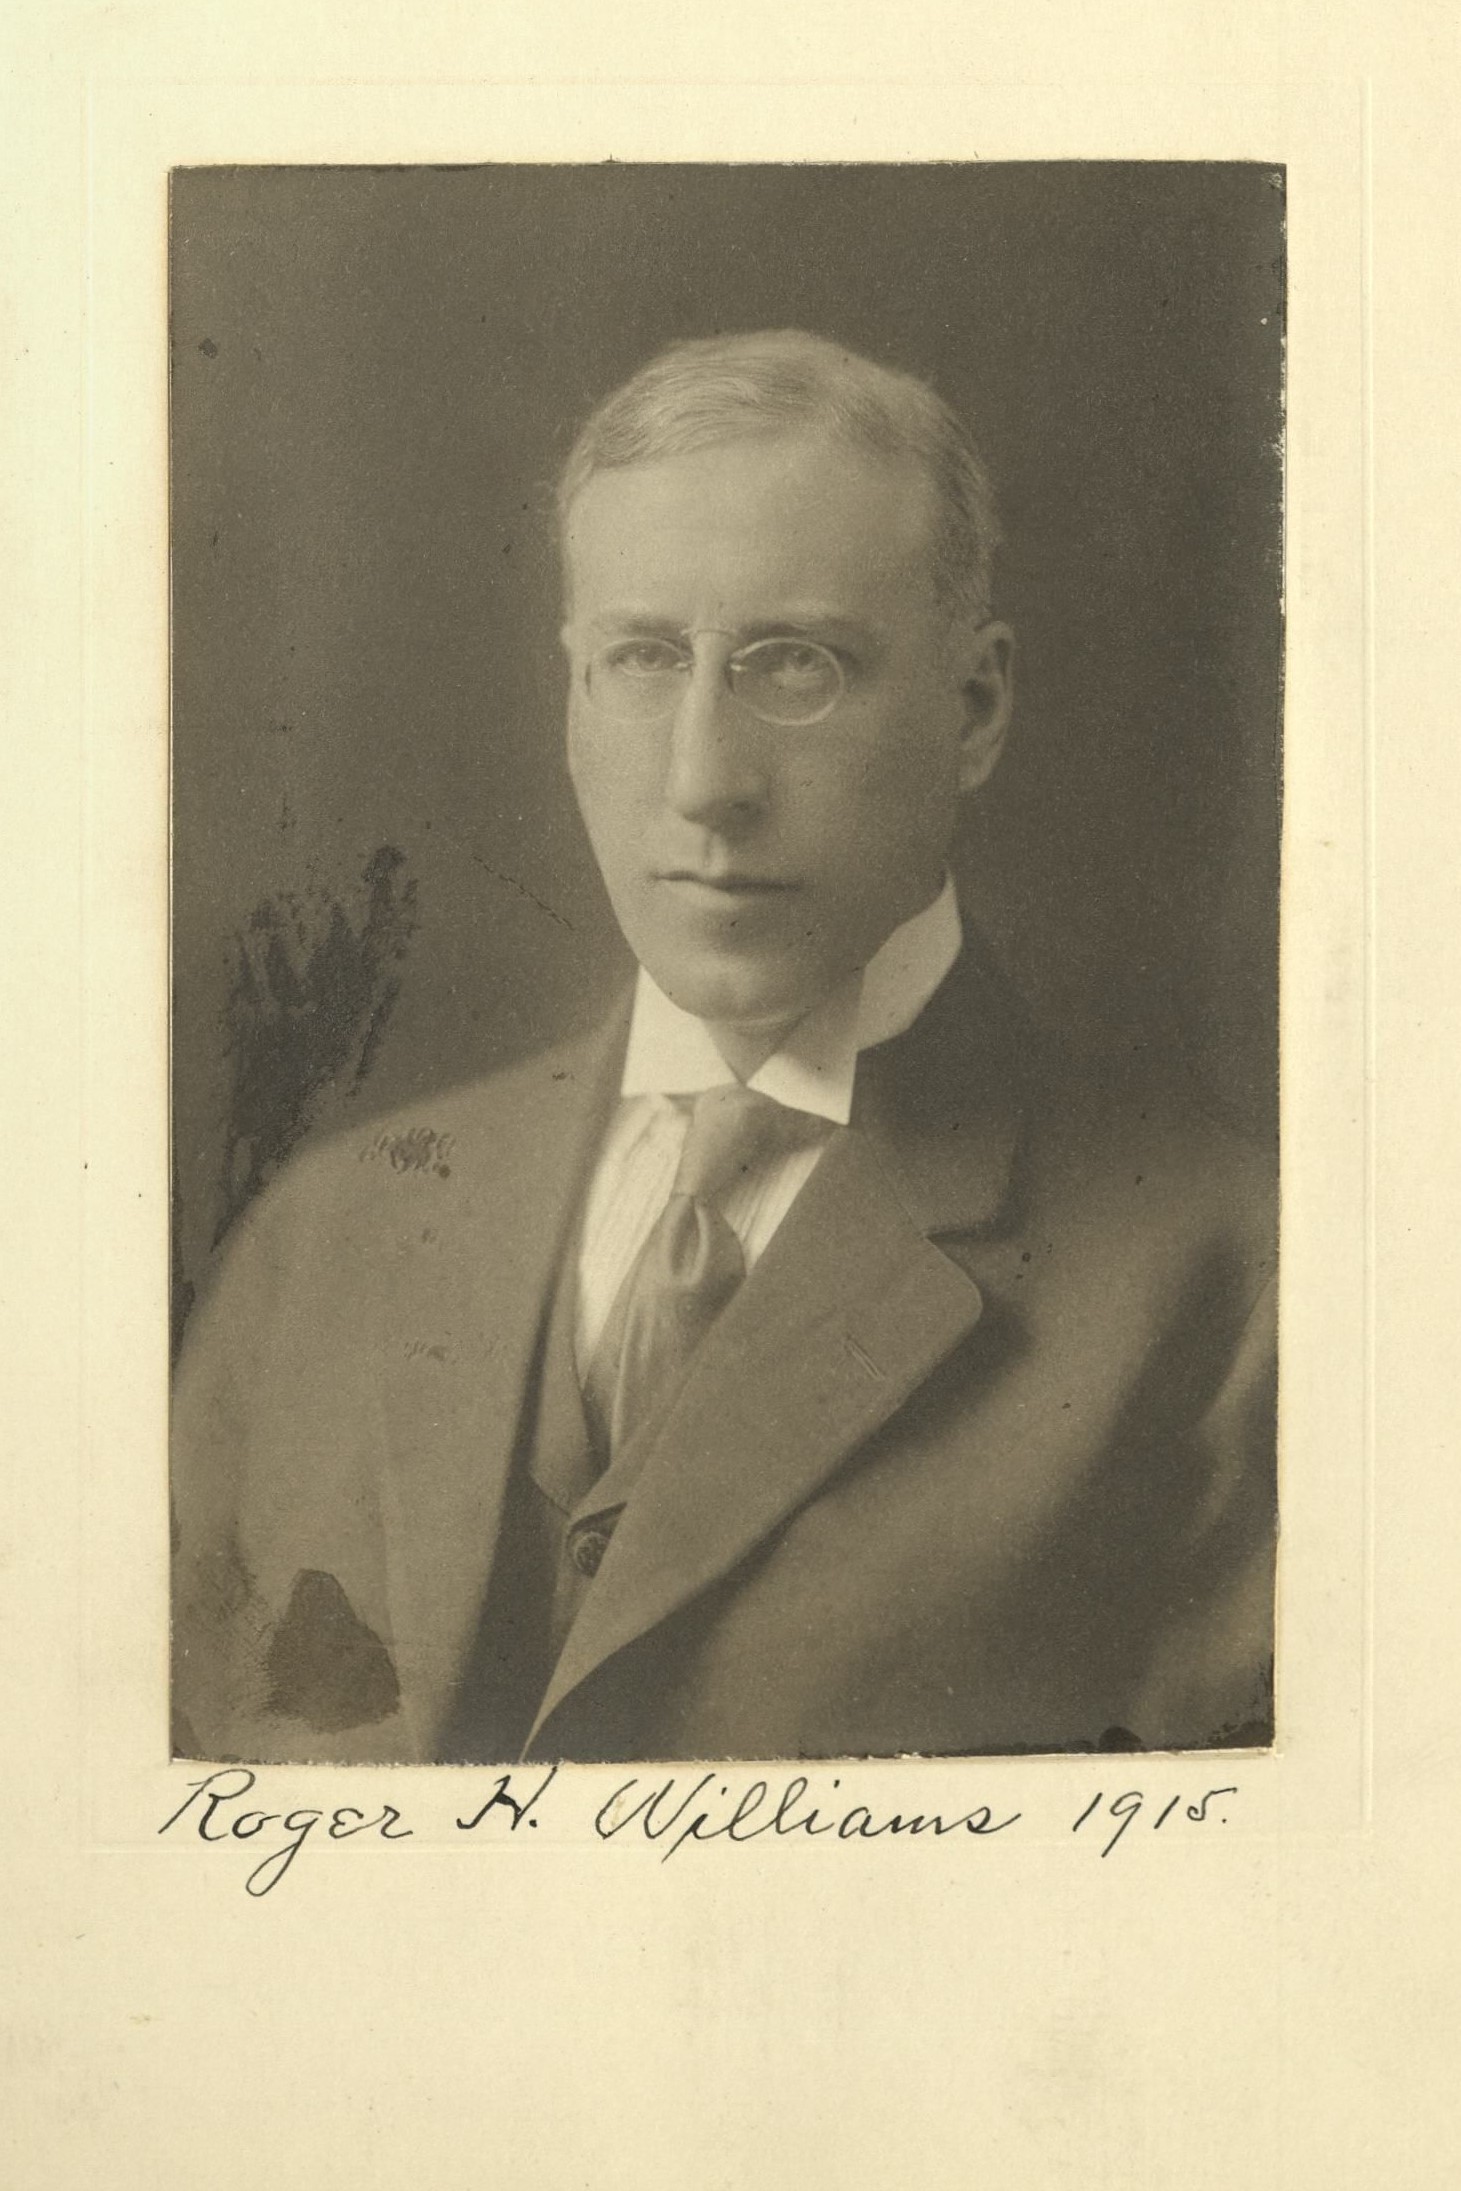 Member portrait of Roger H. Williams